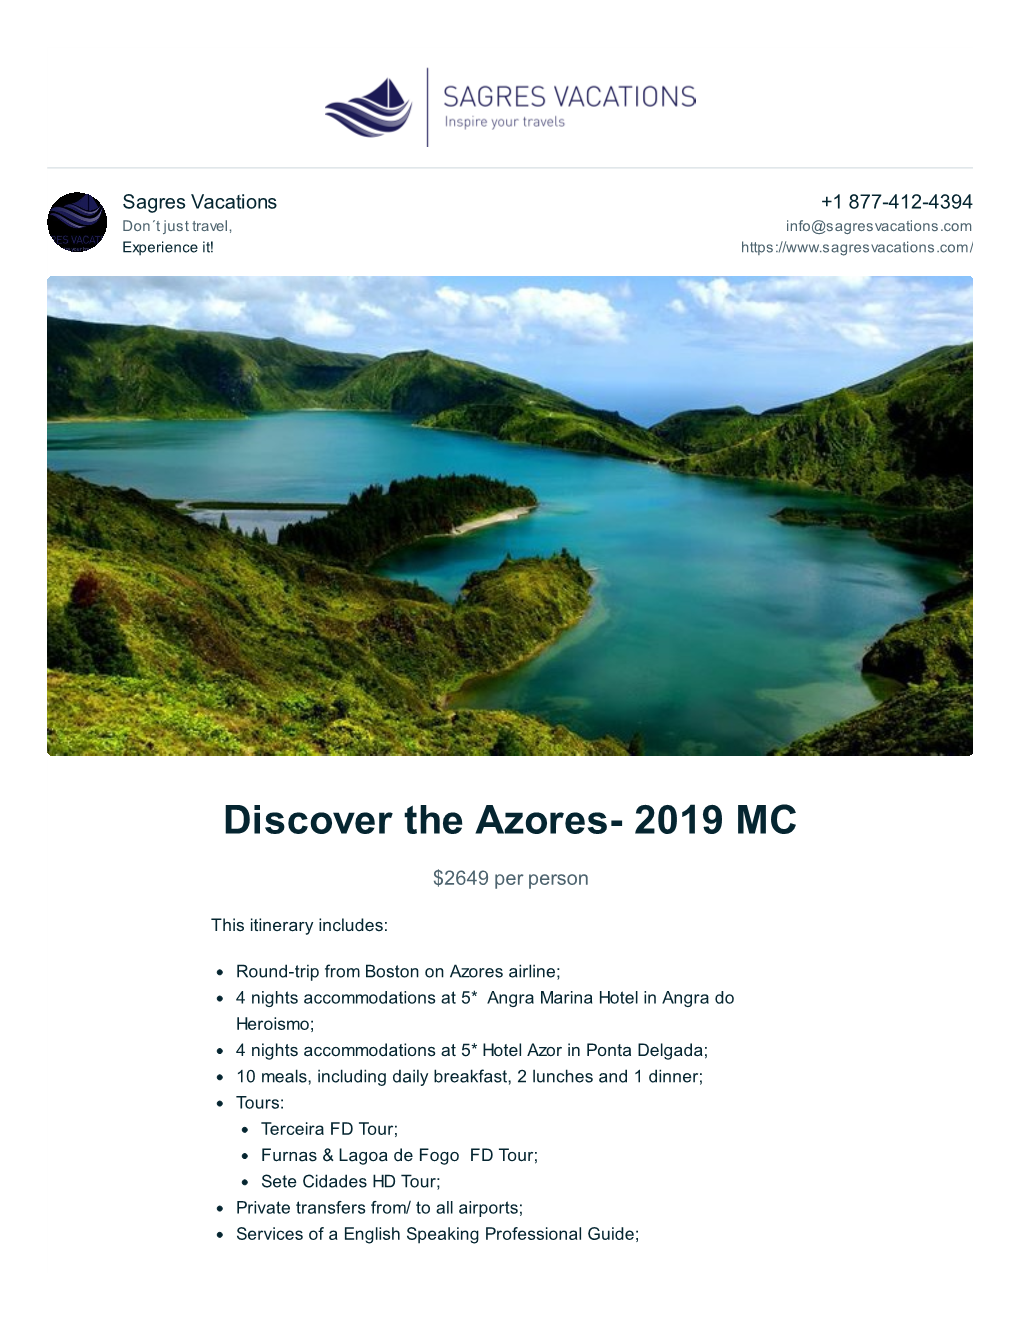 Discover the Azores- 2019 MC